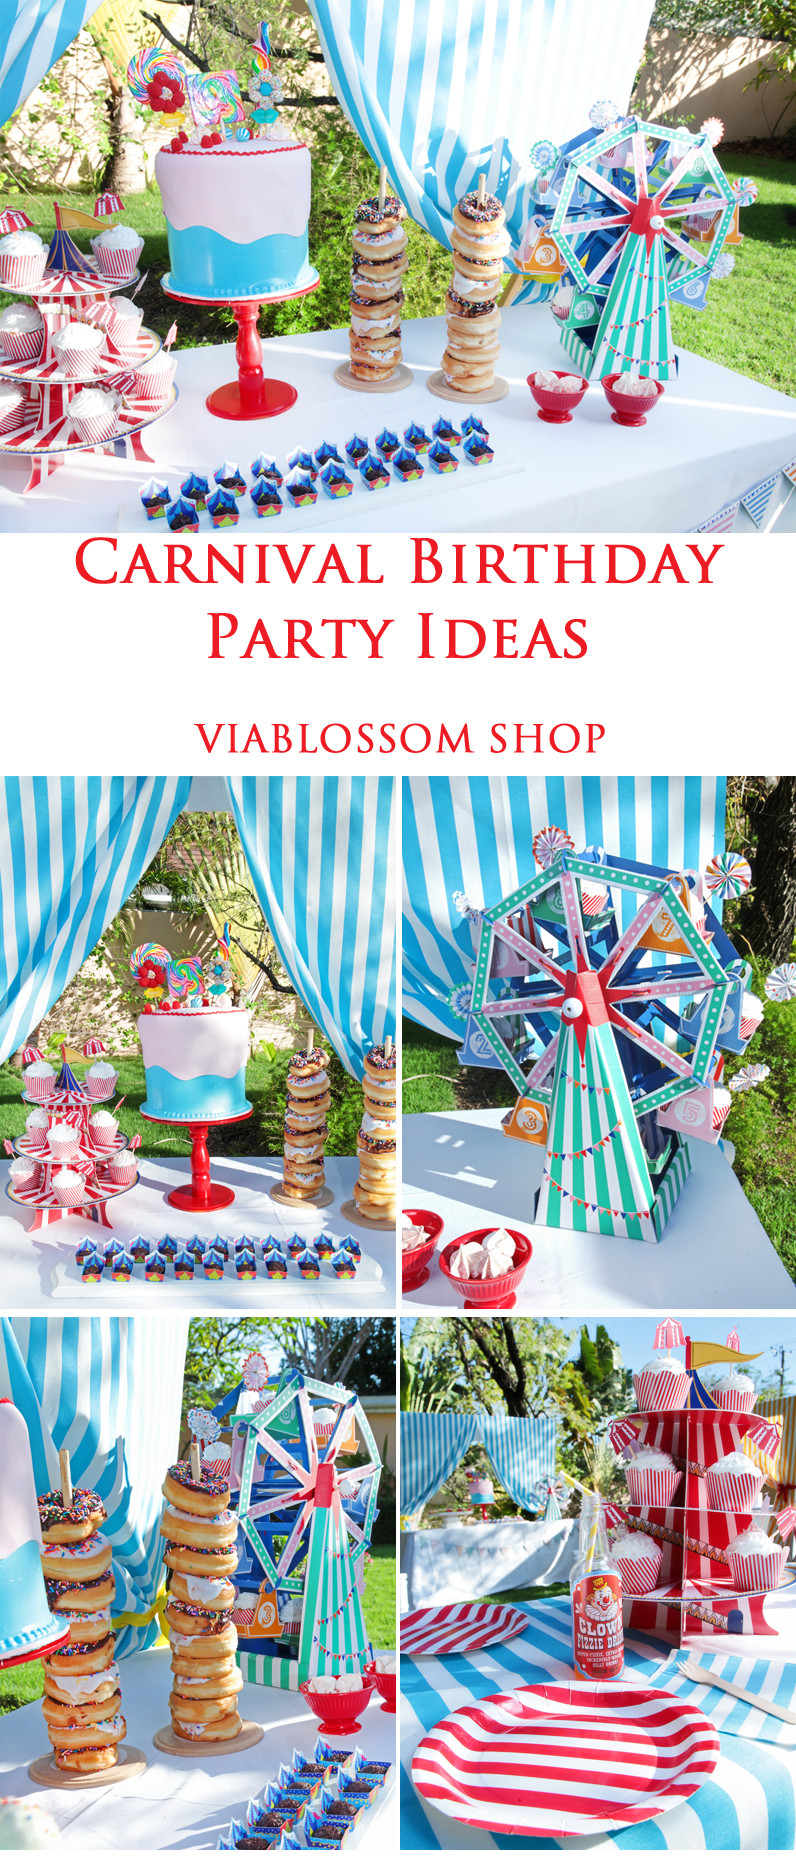 Carnival Themed Birthday Party Ideas
 Carnival Birthday Party Via Blossom